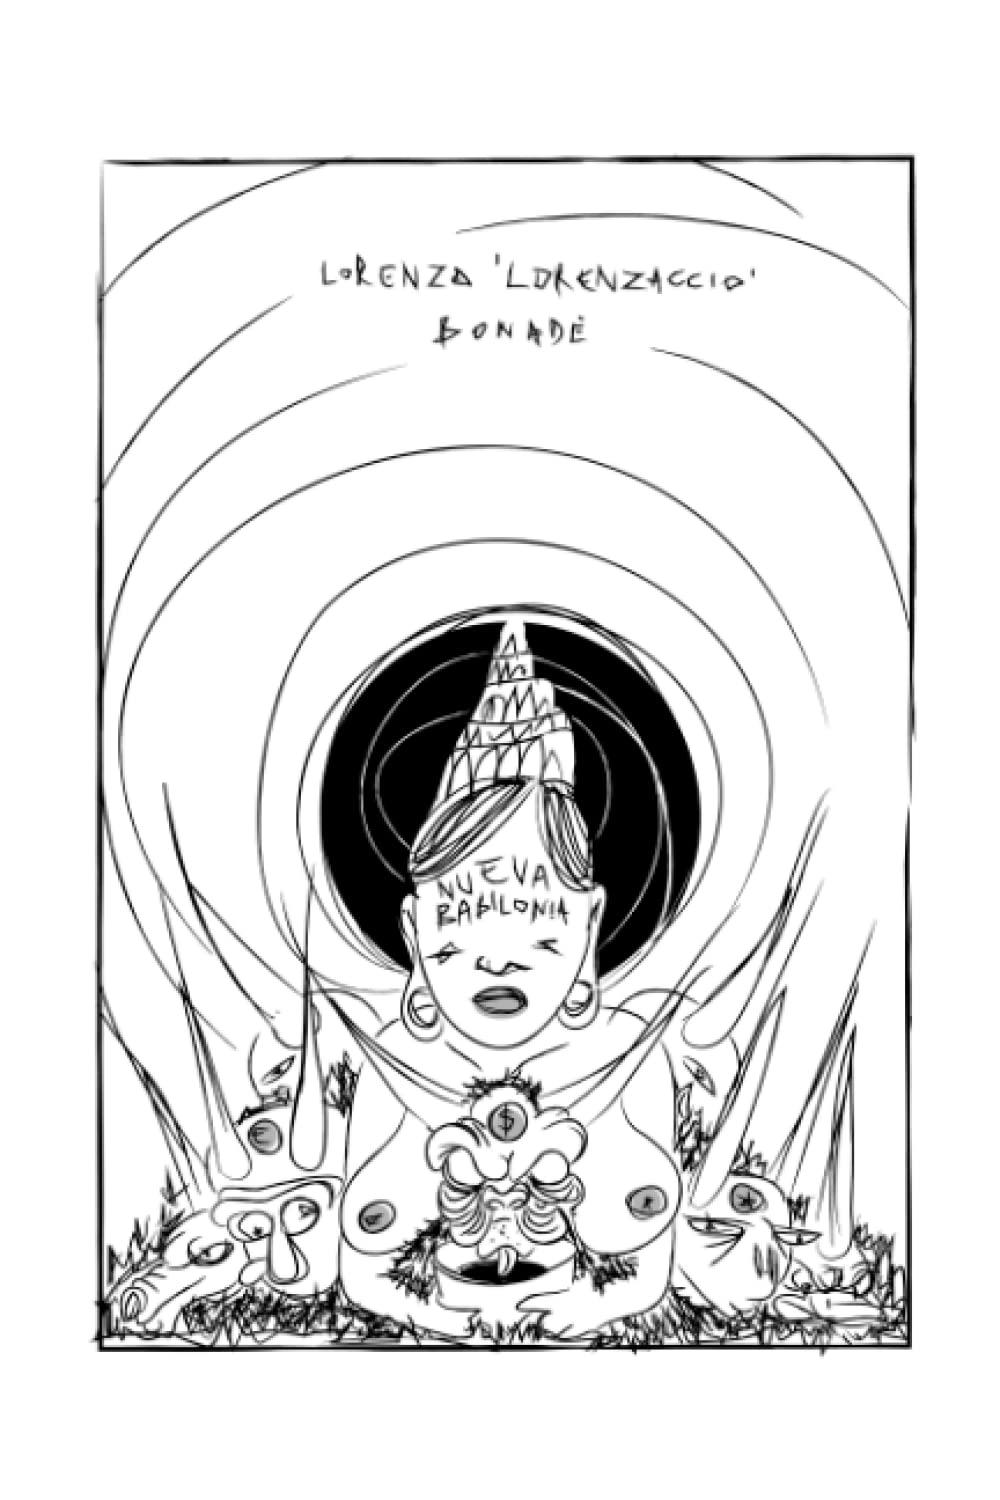 Libro "Nueva Babilonia" di Lorenzo Bonadè